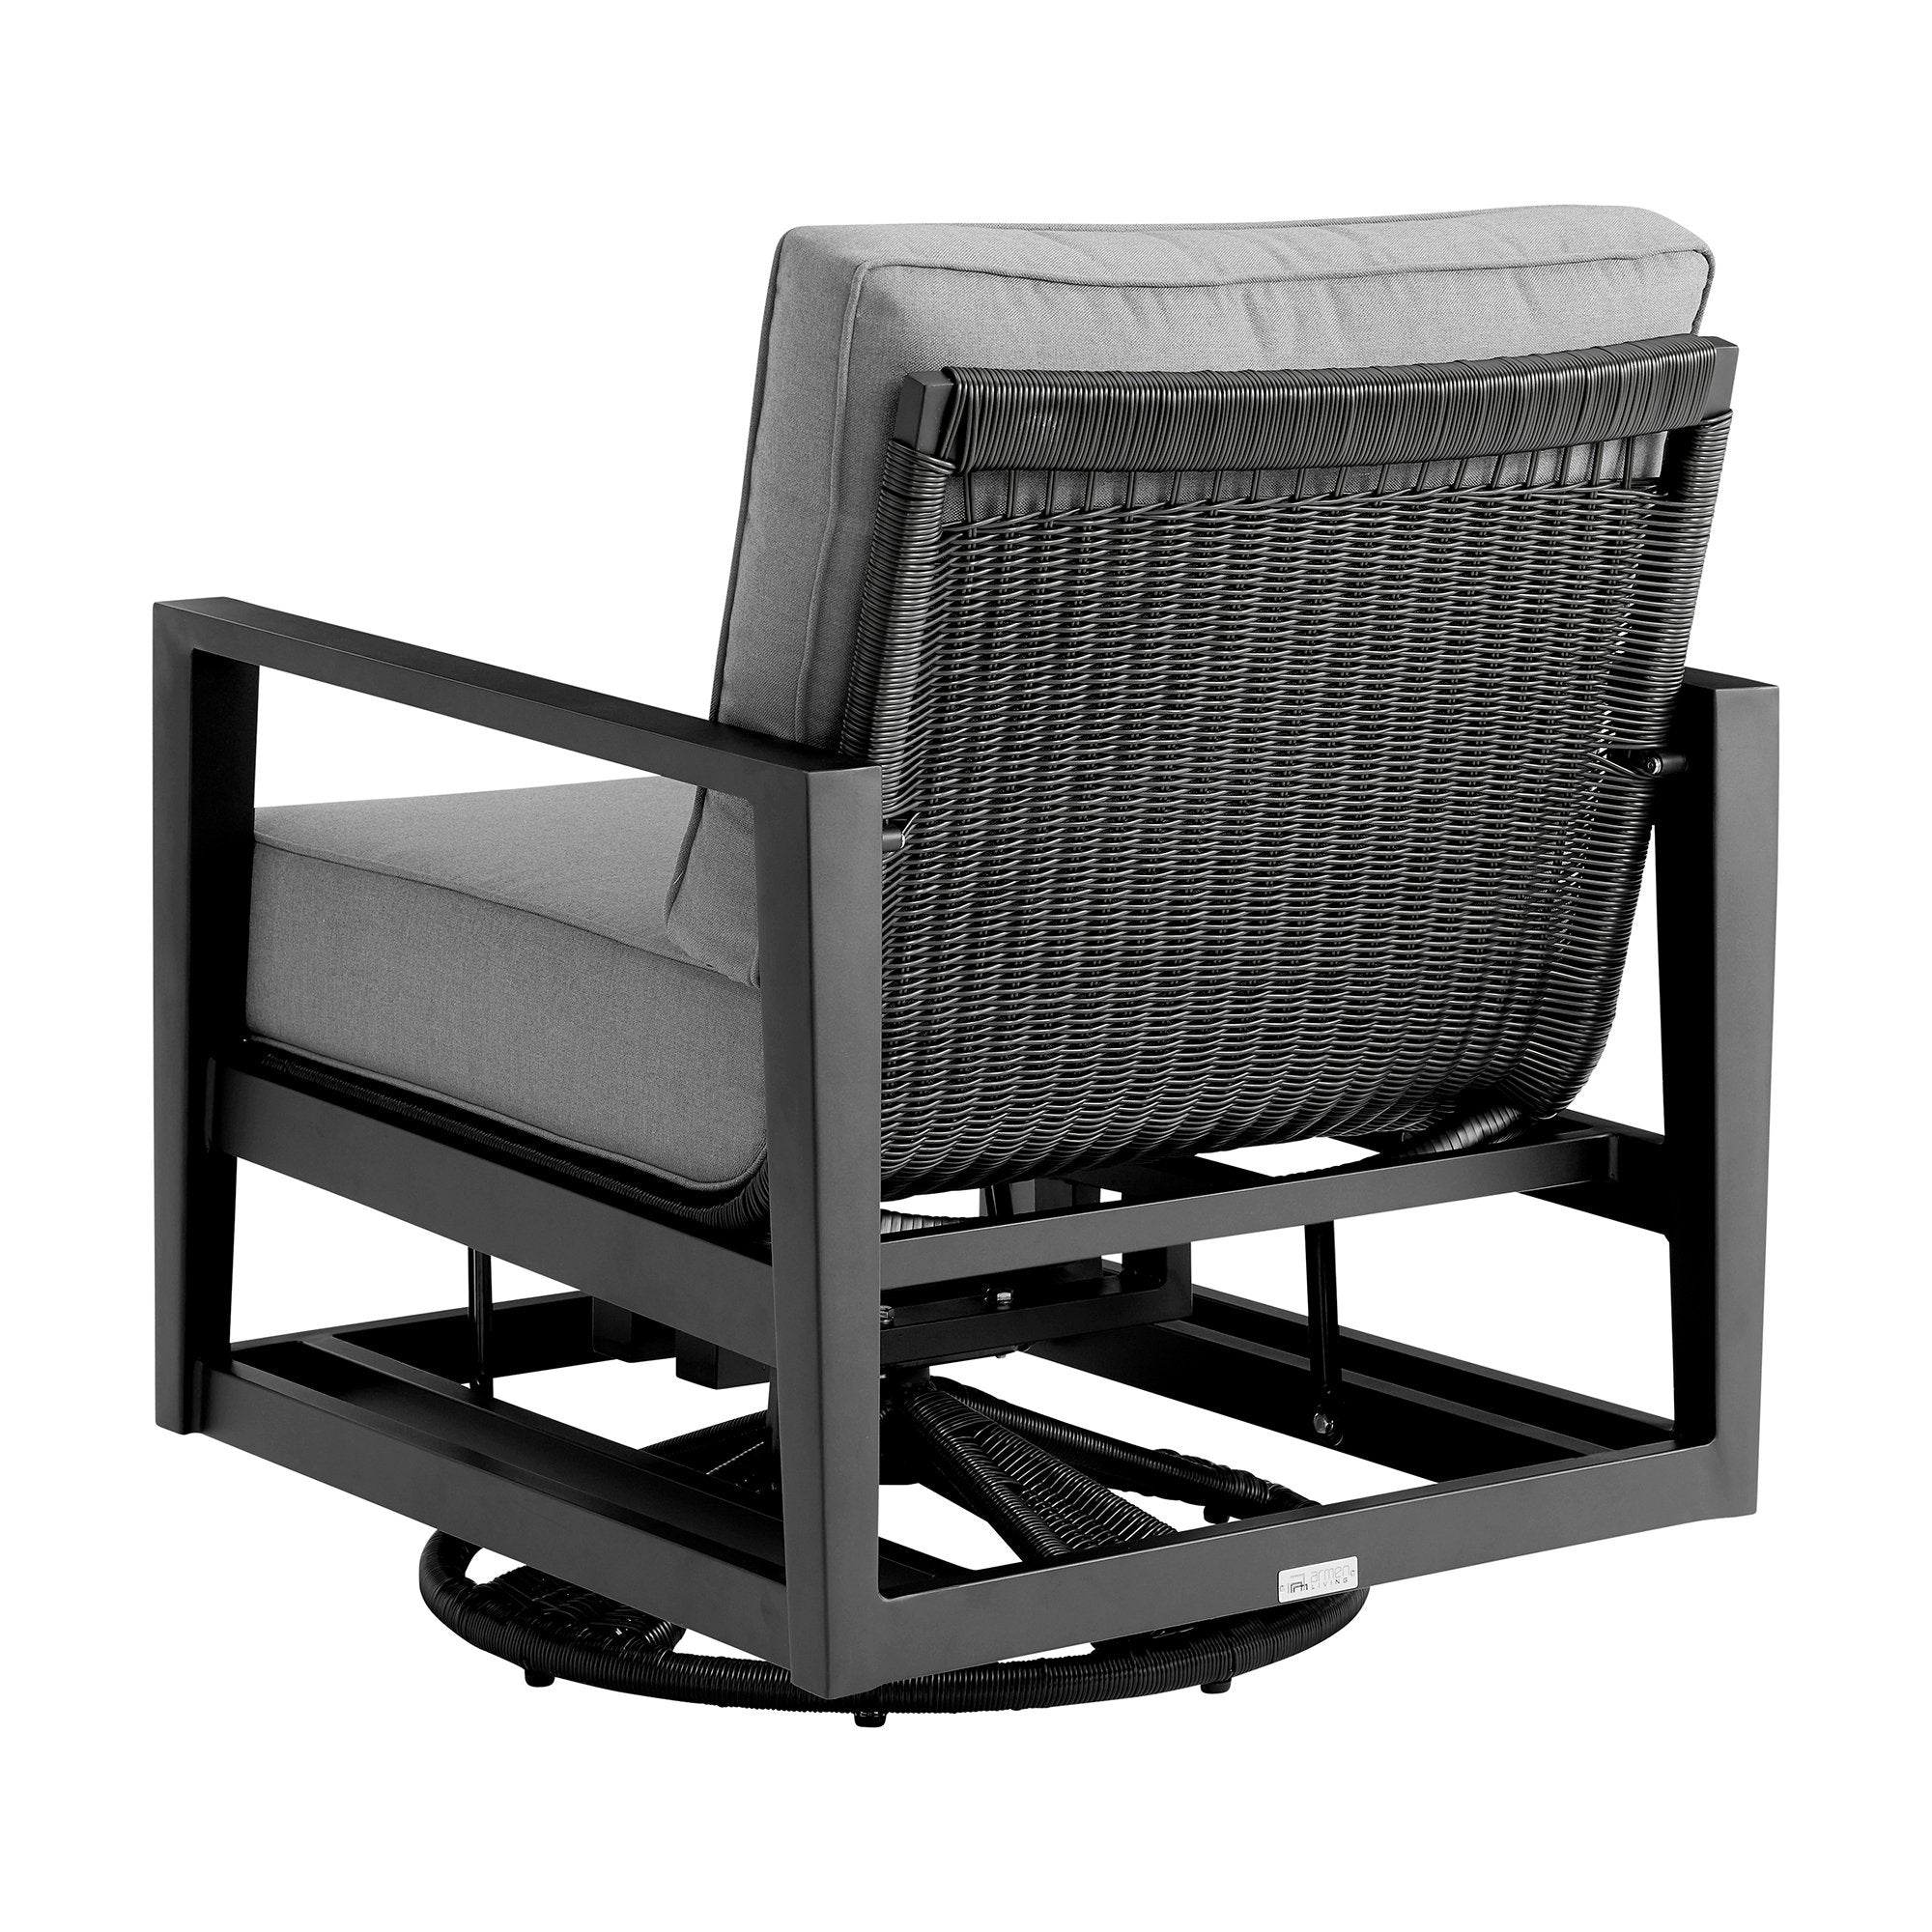 Seashore Black Dark Grey 5pc Outdoor Seating Set